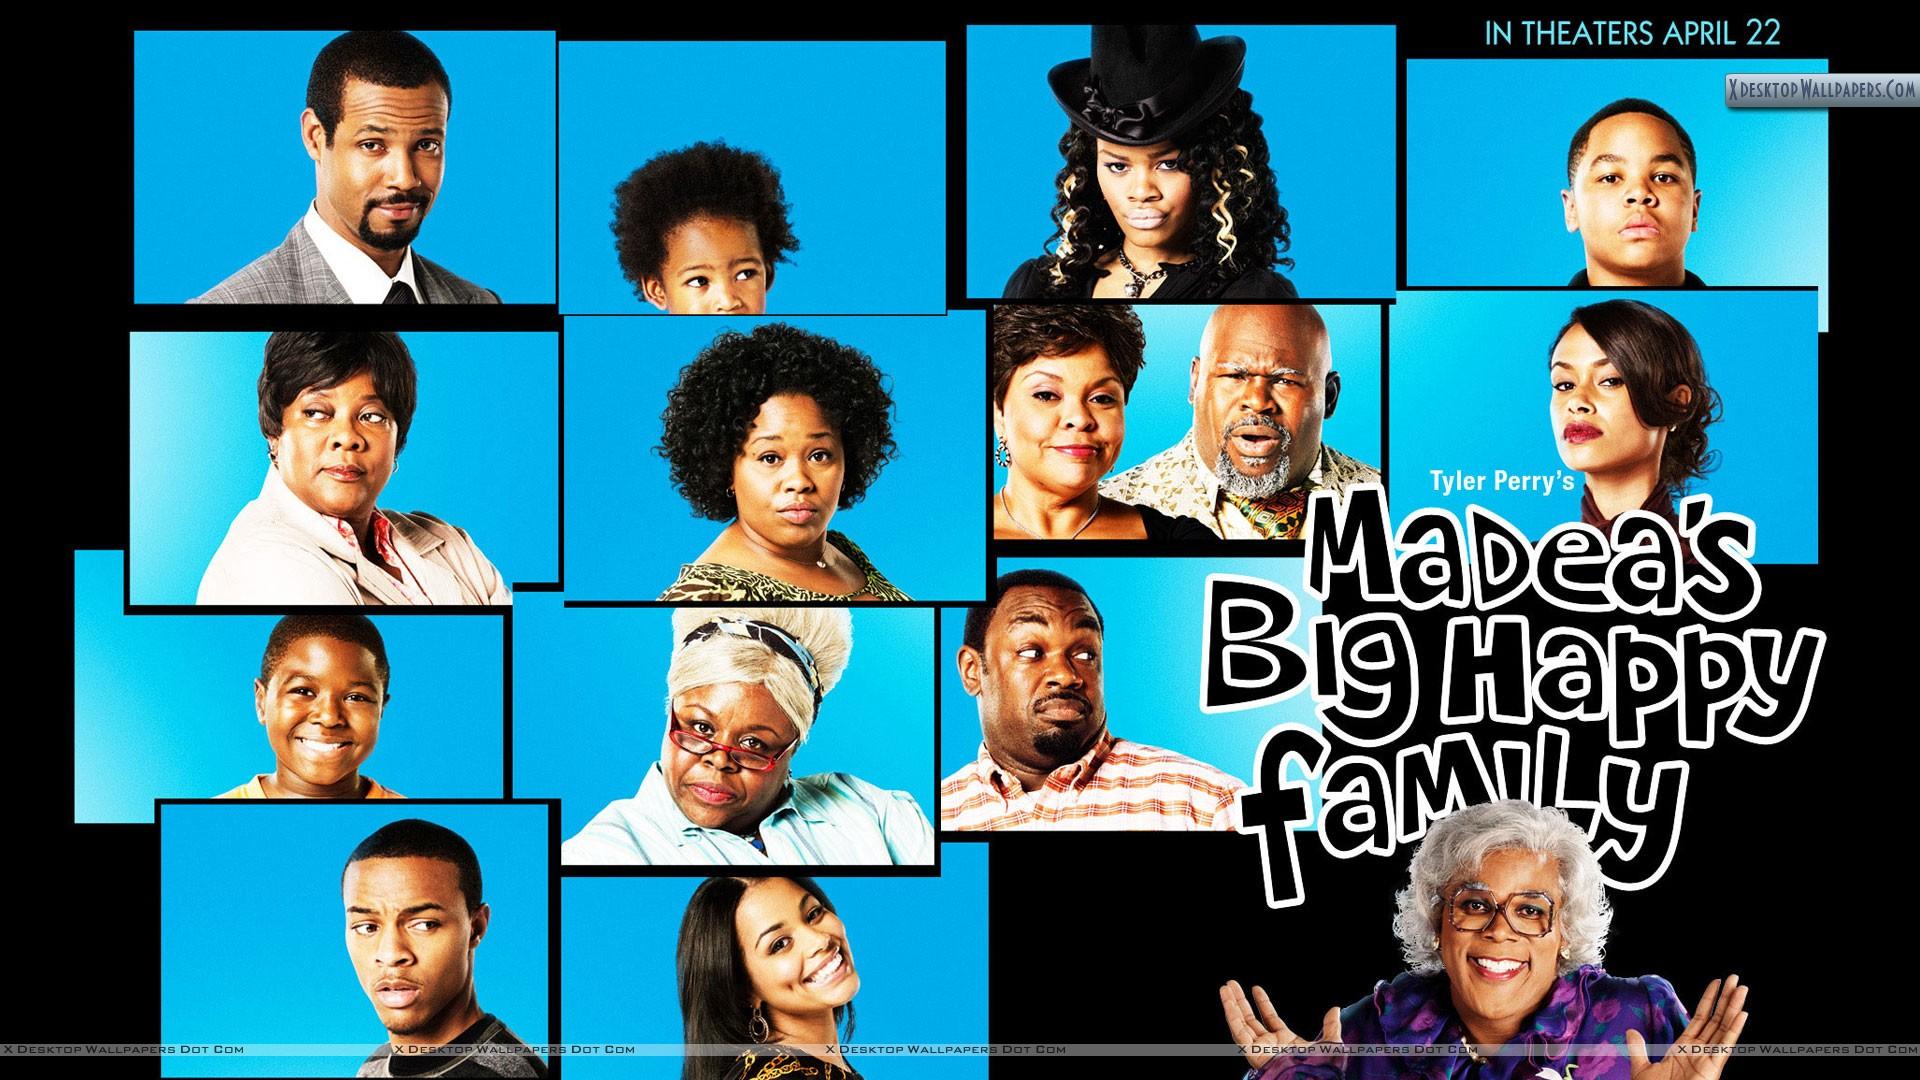 Madea Big Happy Family Wallpaper, Photo & Image in HD